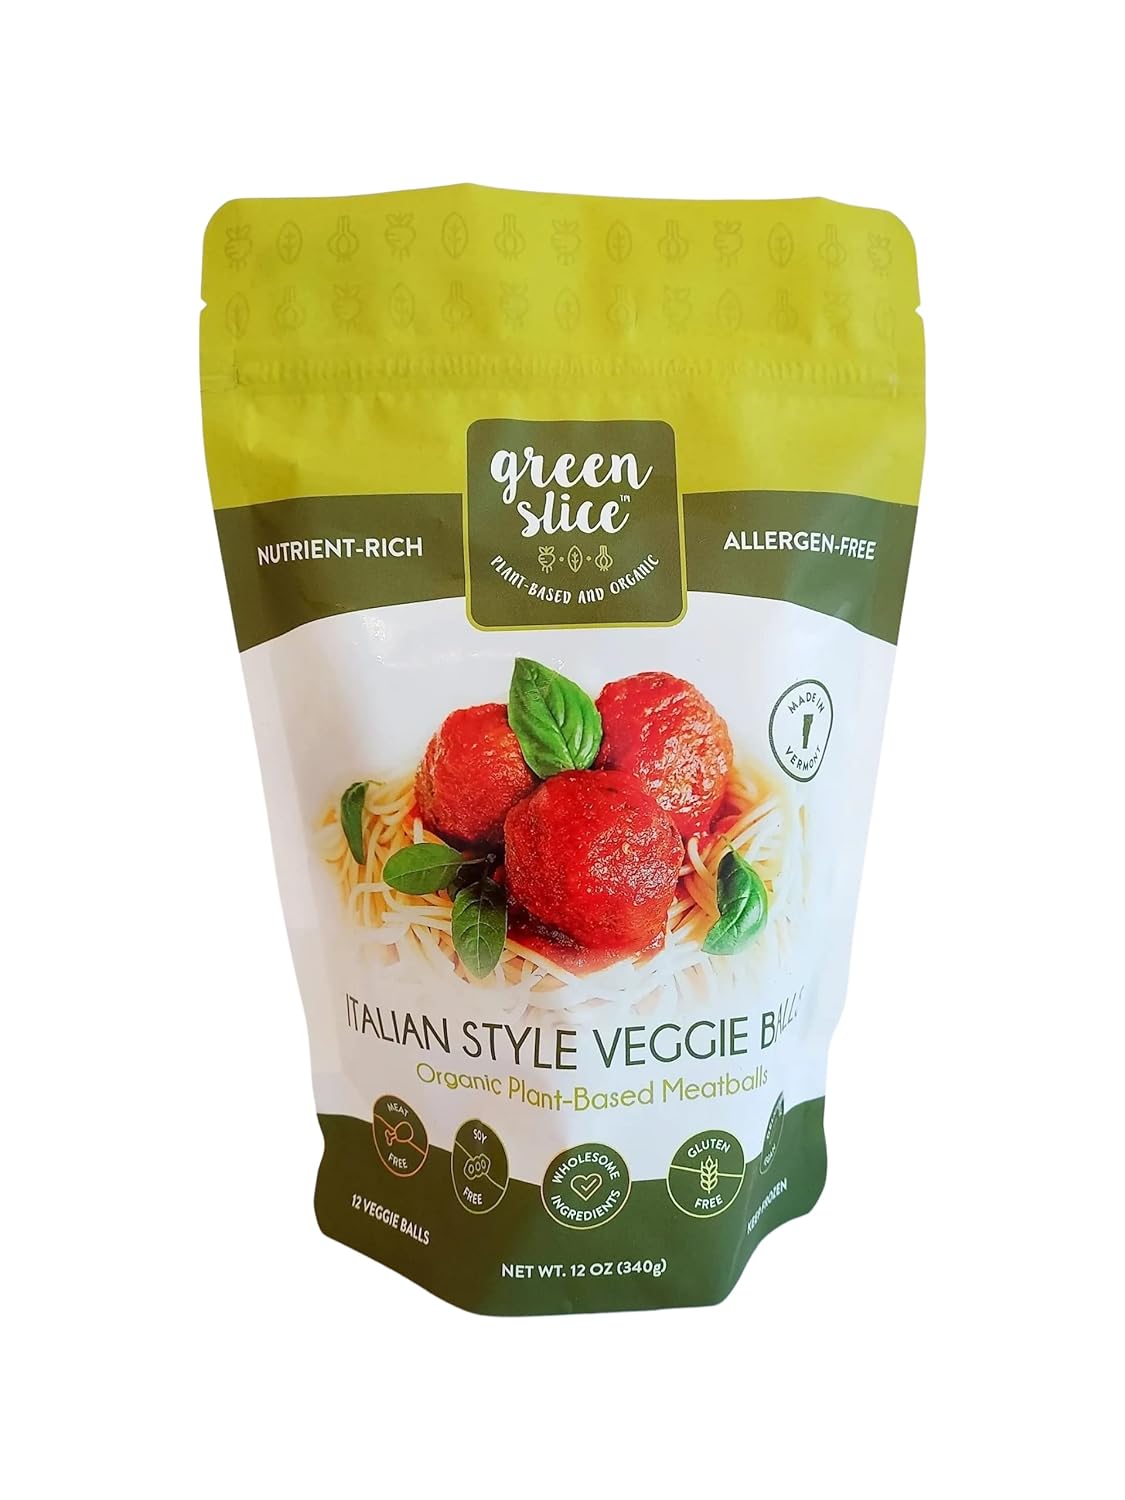 Green Slice Italian Style Veggie Balls 6/12 oz Bags | Wholesome gluten-free plant-based meatballs | Vegan, allergen-free, made in Vermont